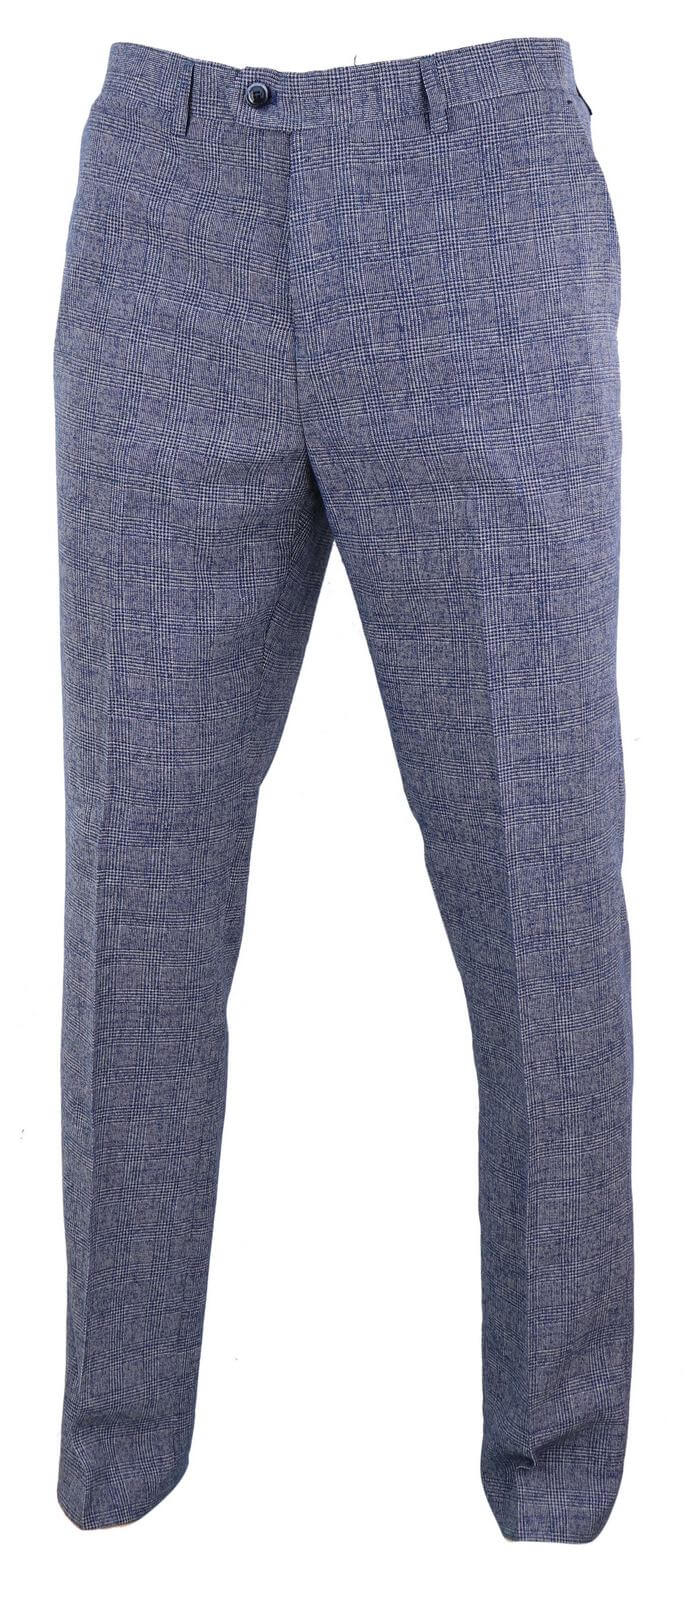 Cavani Antonio  Mens GreyBlue Check Vintage Trousers  Regular Length  Buy Online  Happy Gentleman